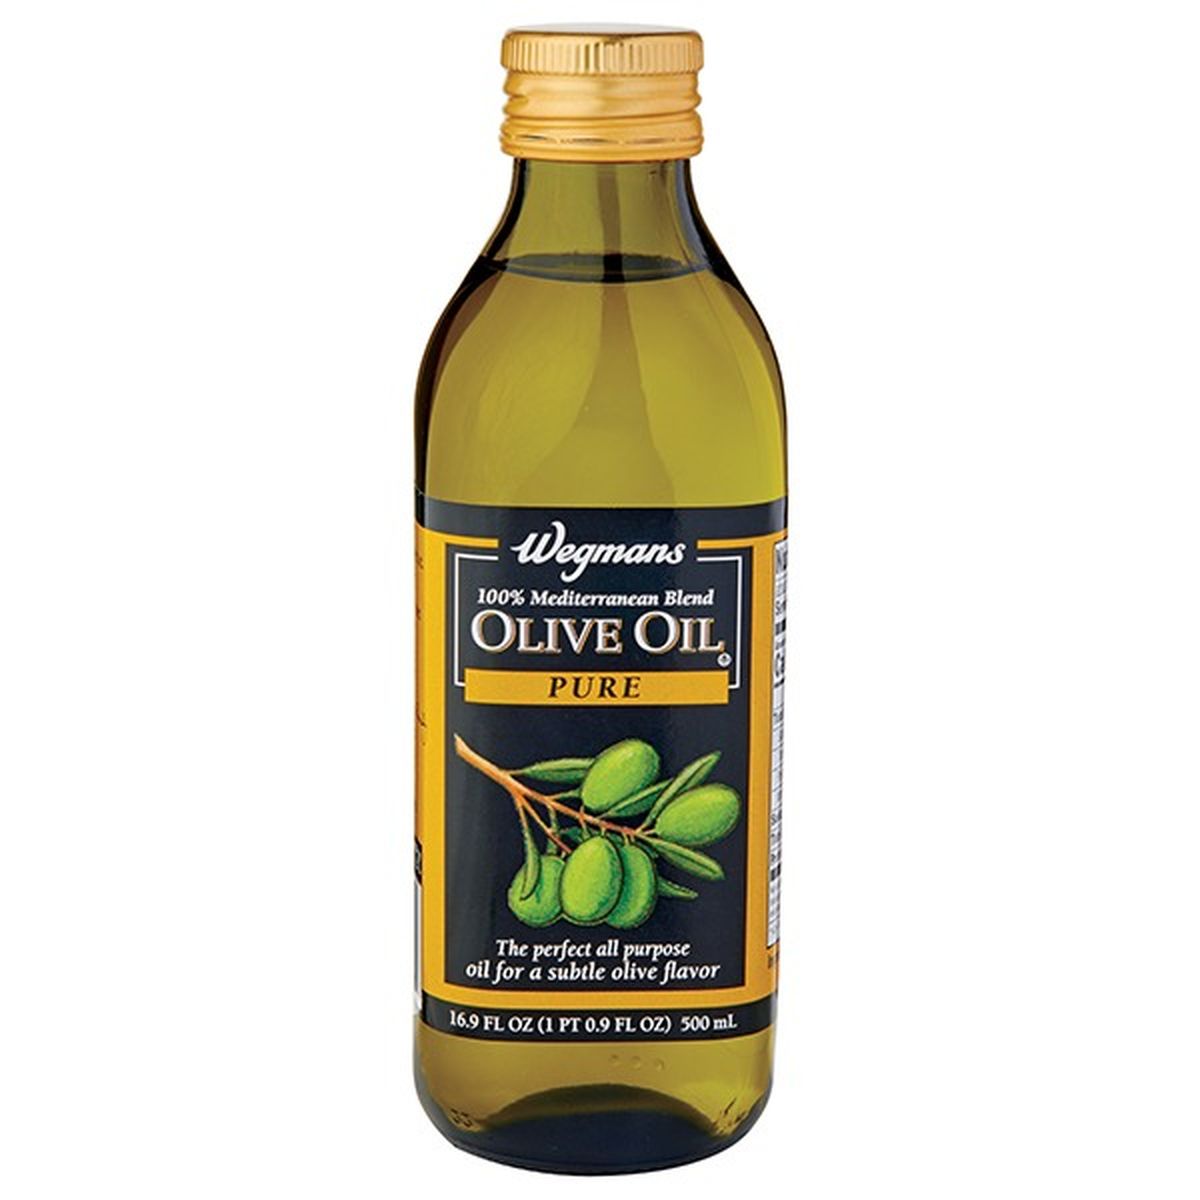 Calories in Wegmans Pure Olive Oil